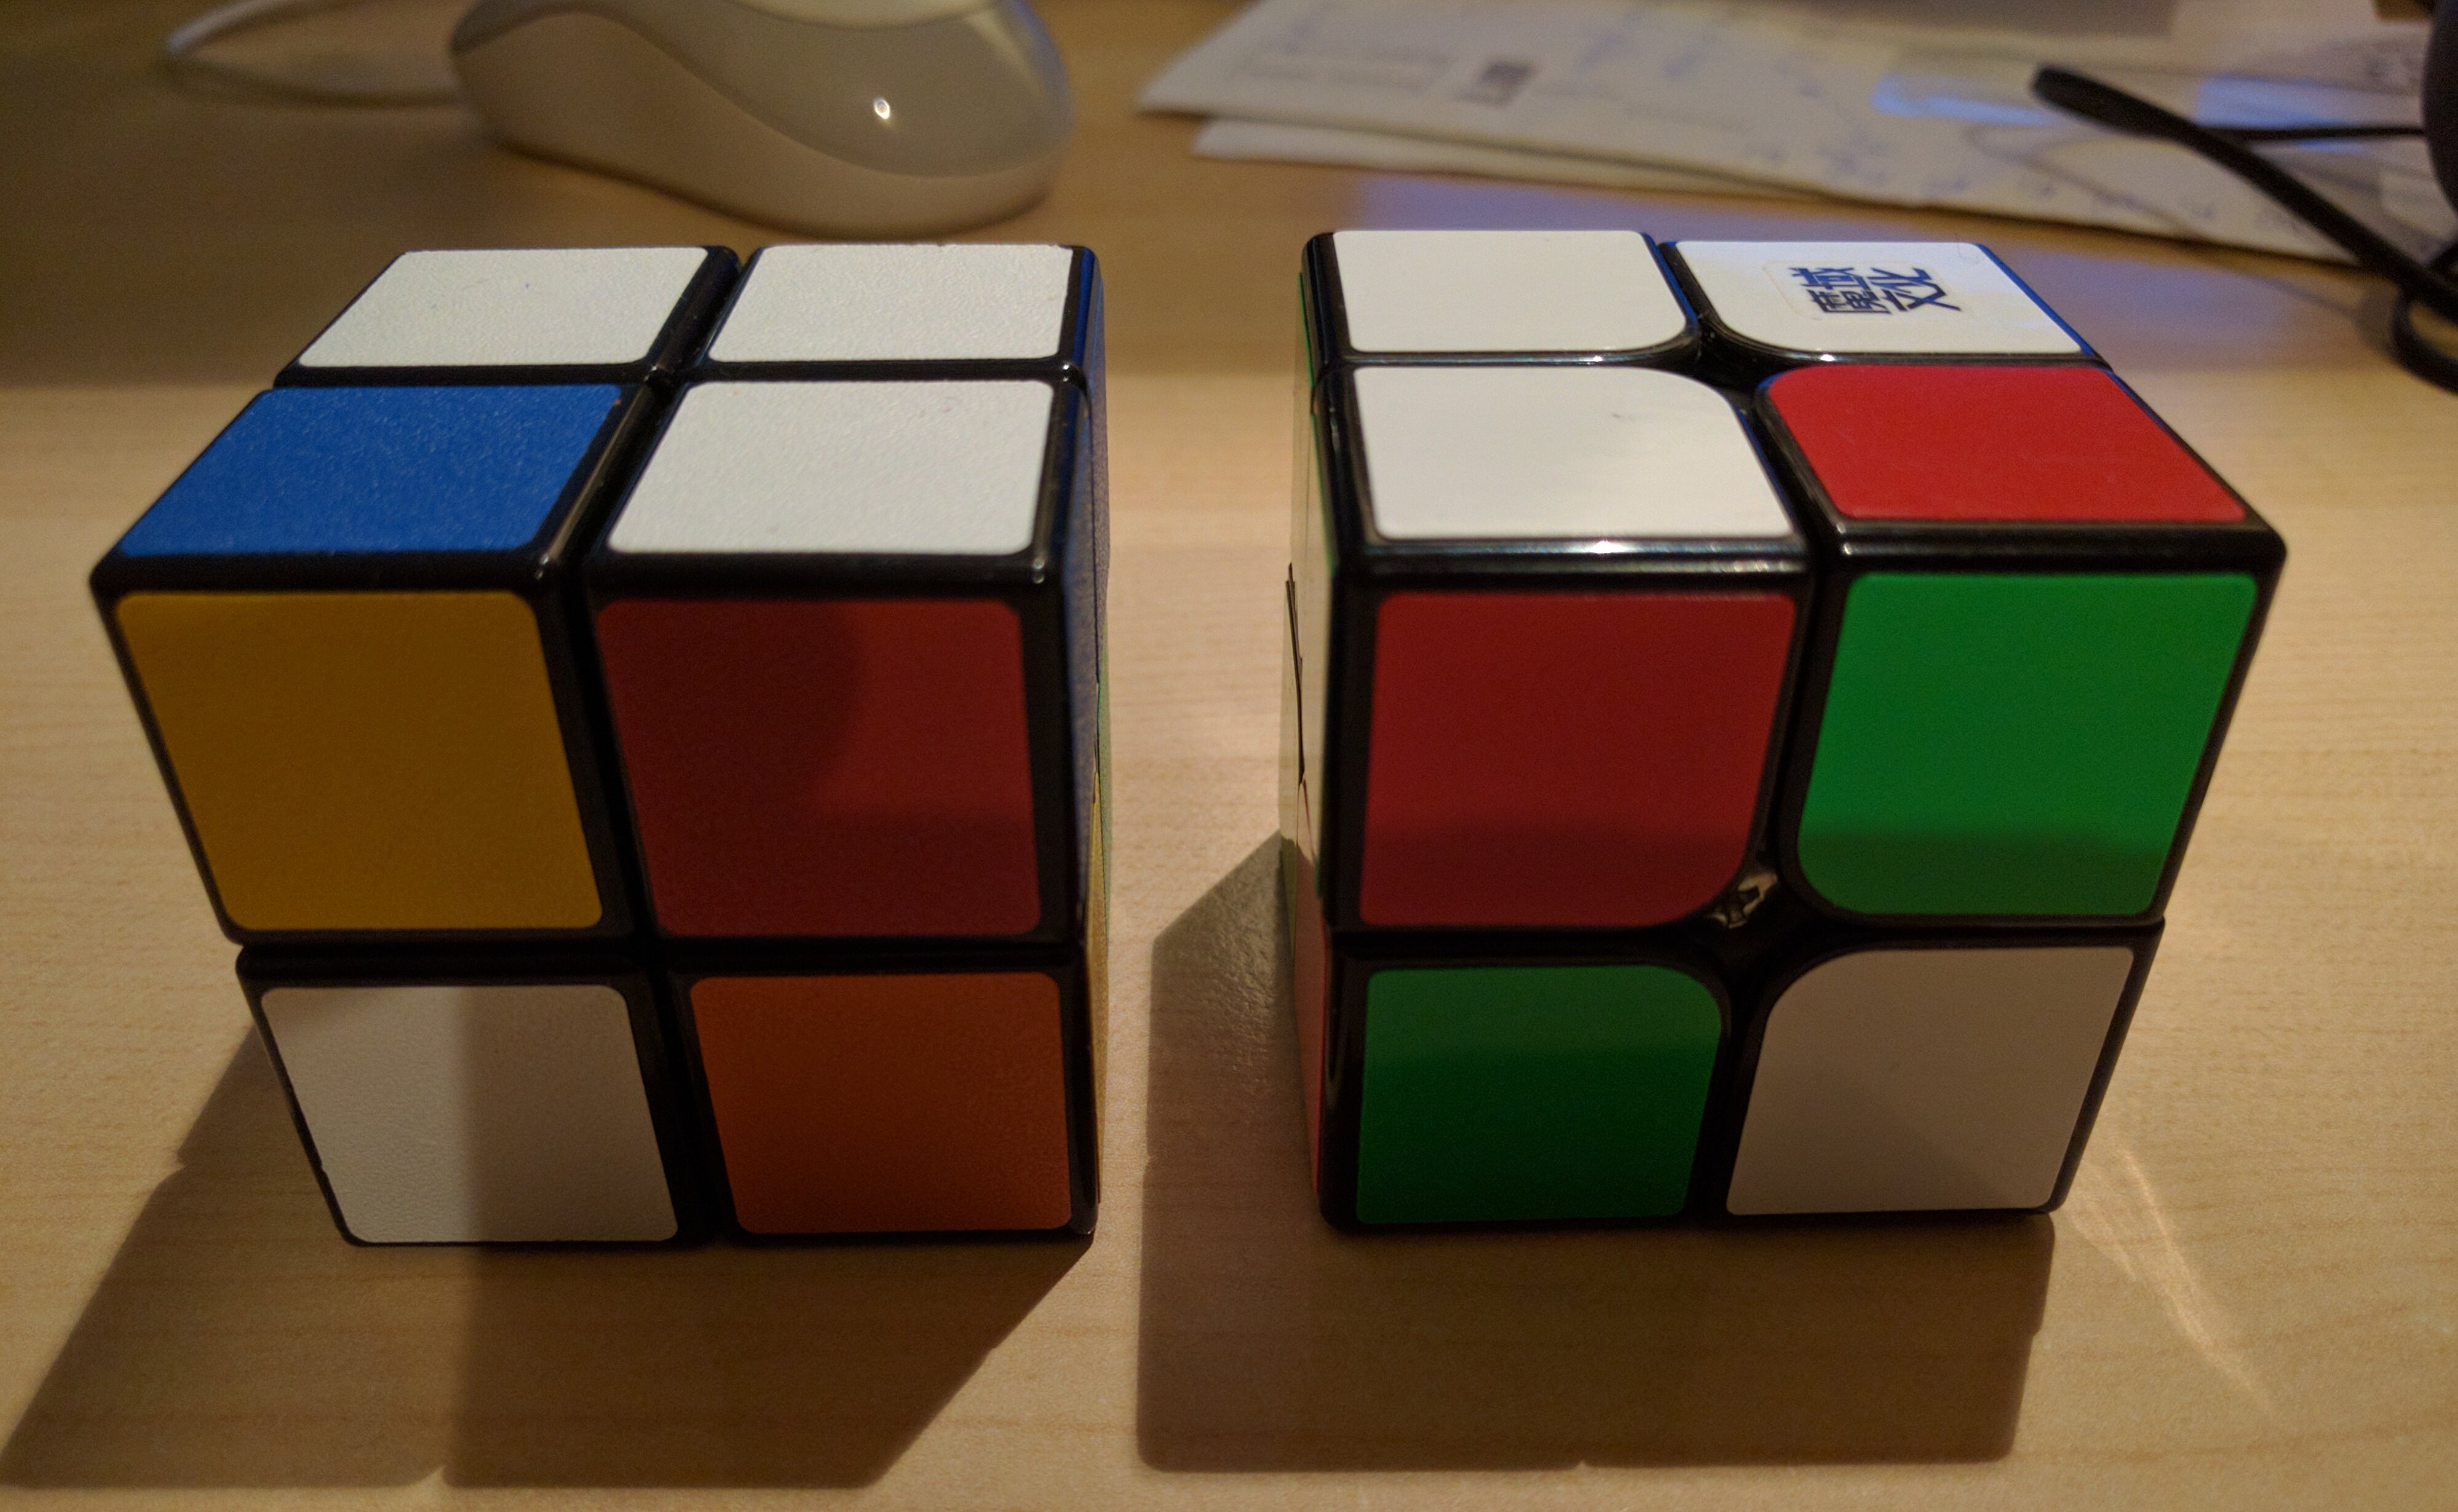 Solving the 2x2x2 Rubik's Cube.